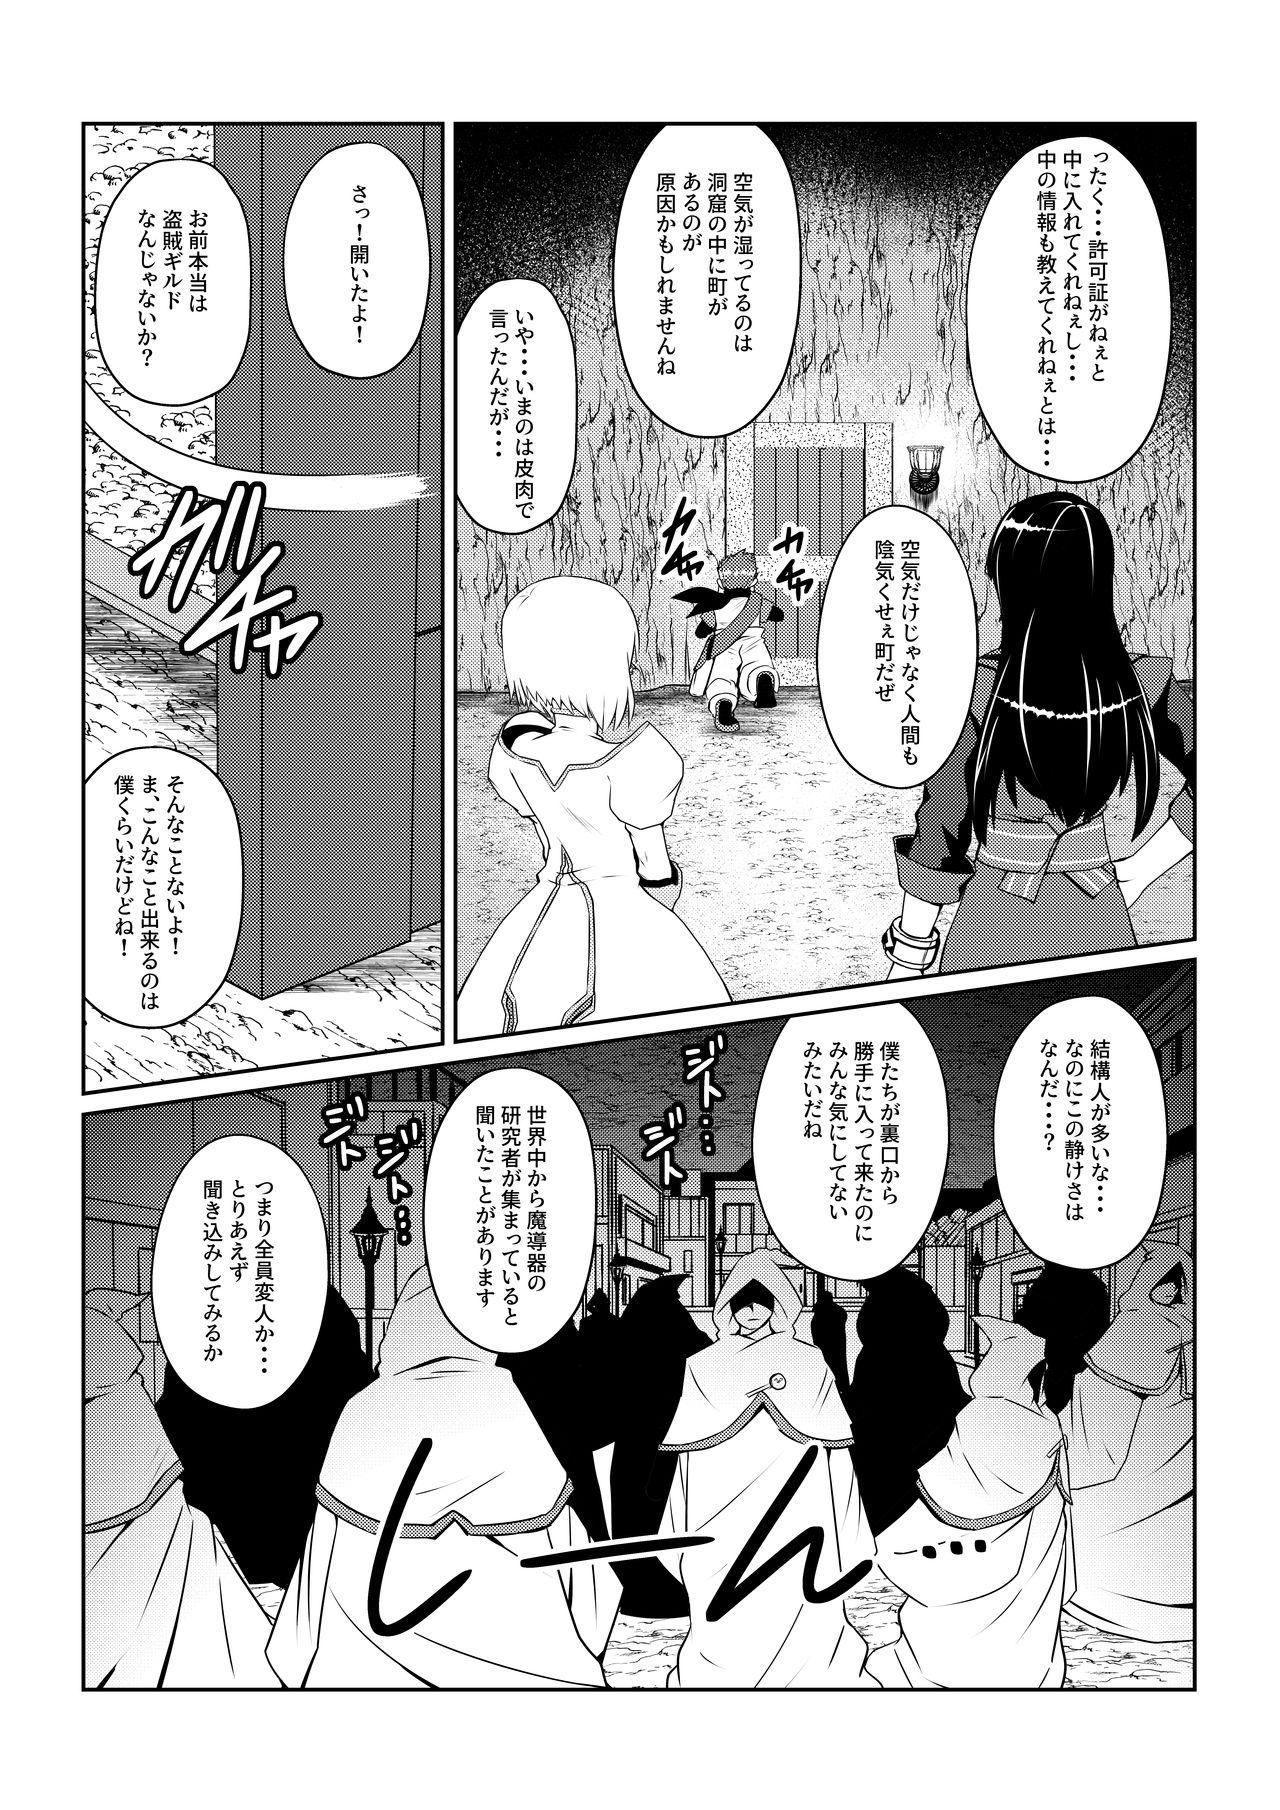 Pasivo Gekka Midarezaki - Tales of vesperia Exhibition - Page 4